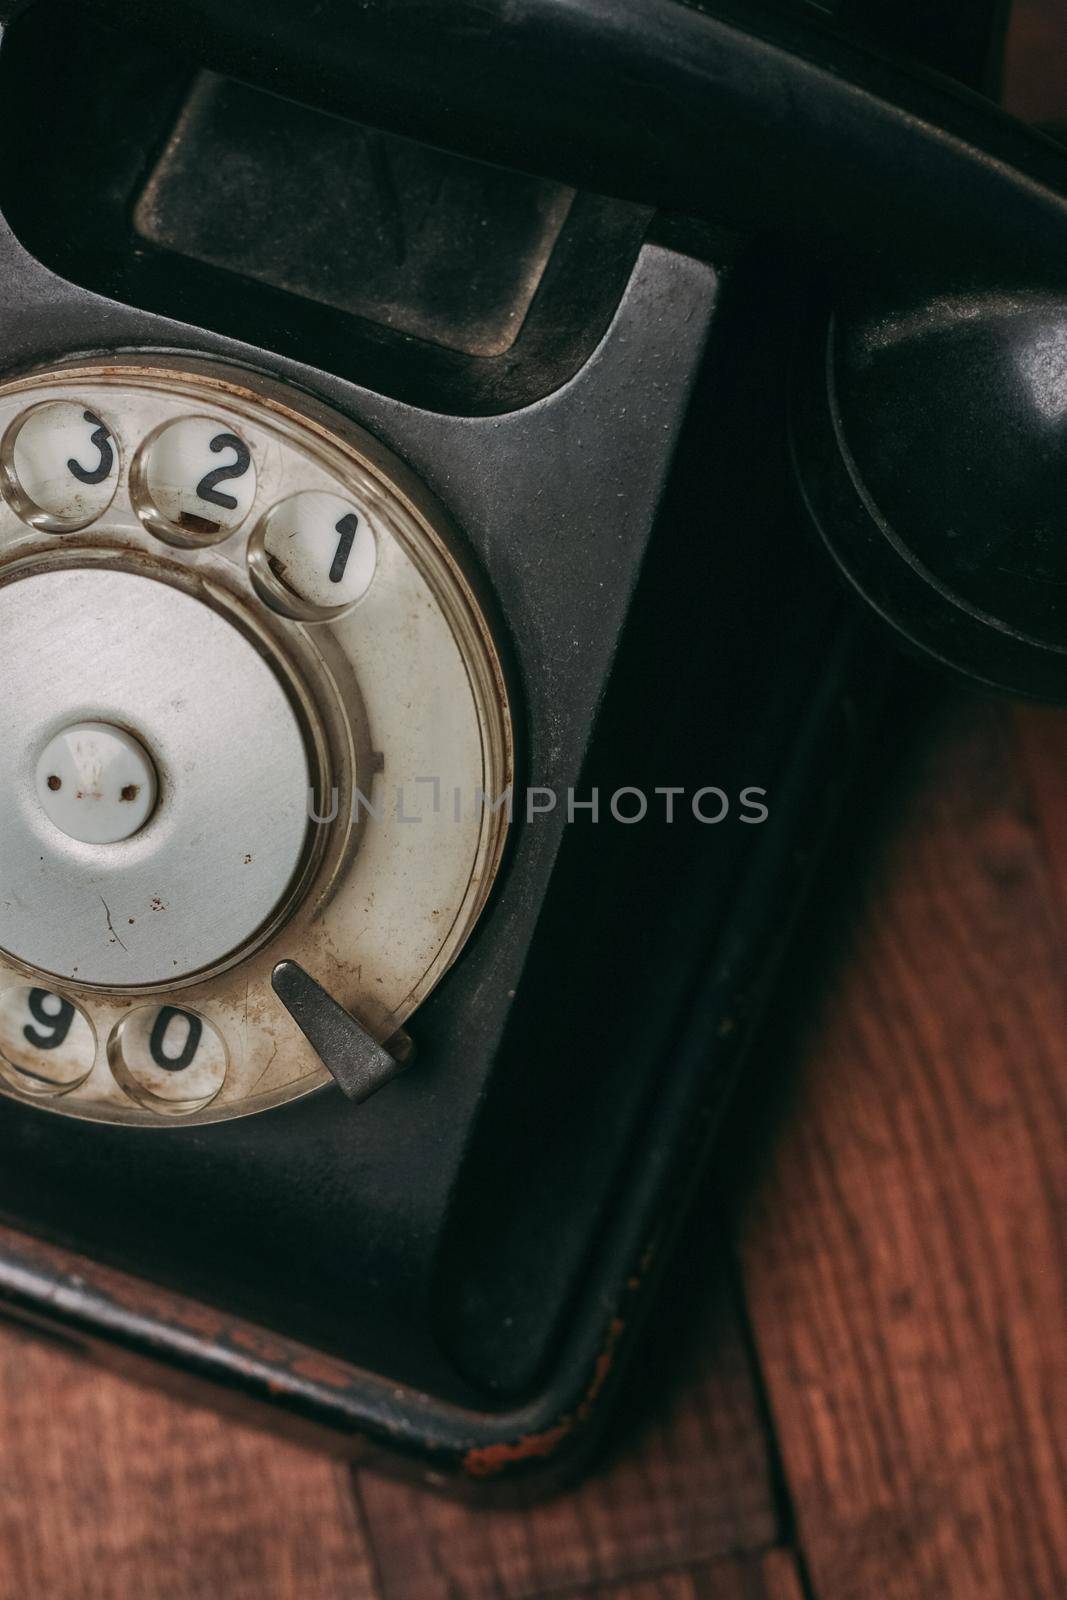 retro telephone old technology communication antique wood background. High quality photo